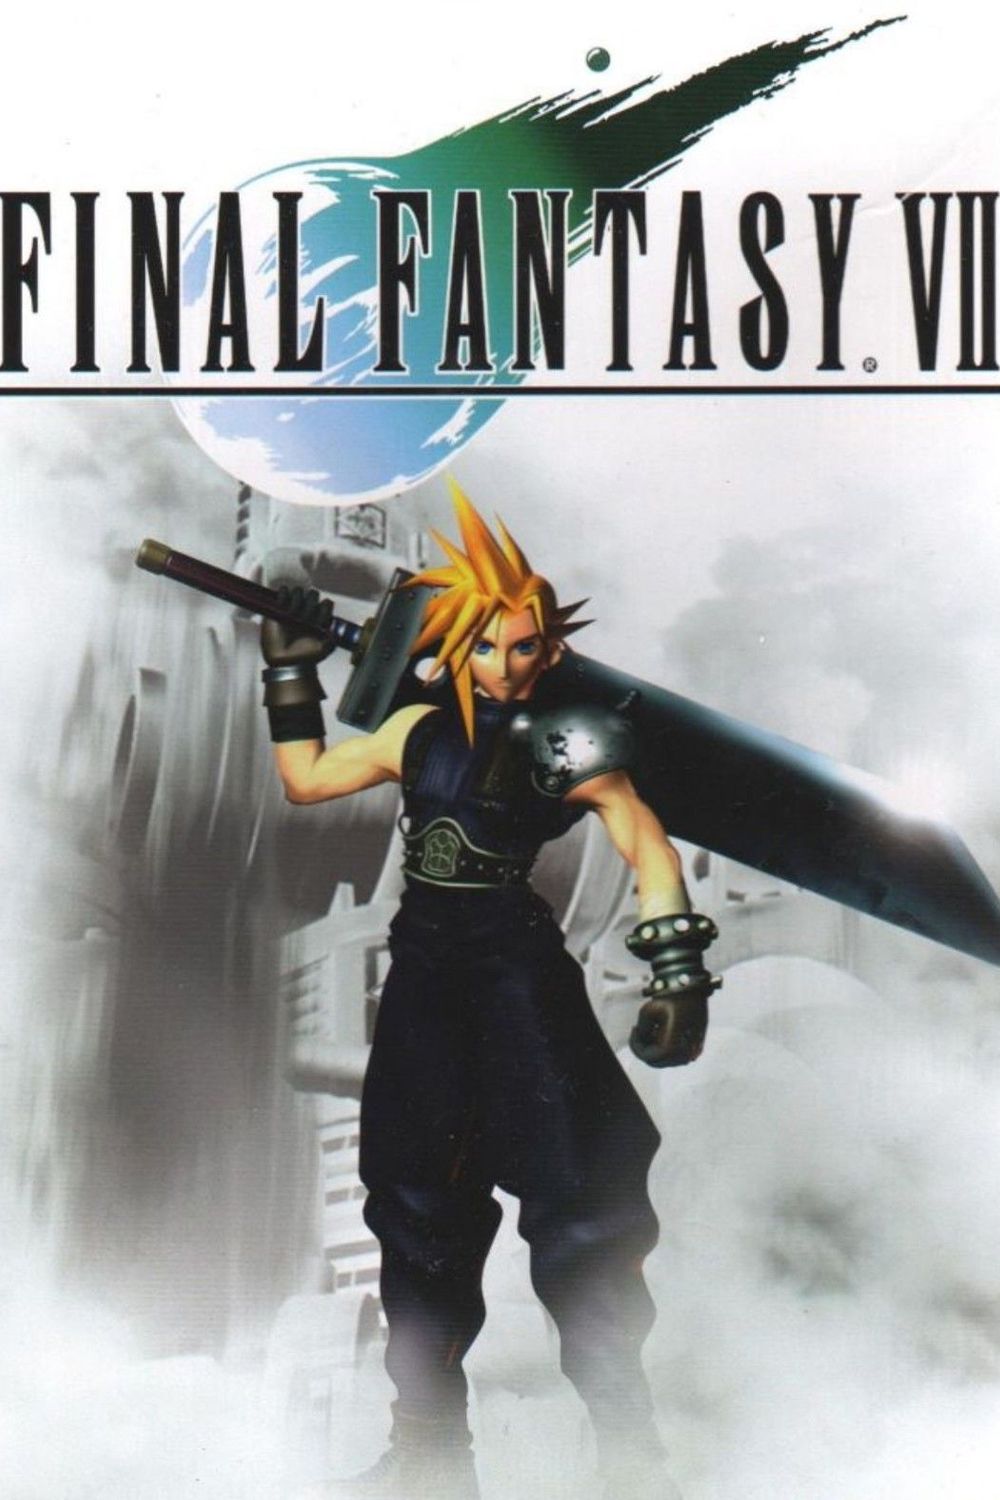 Final Fantasy 7 Rebirth Devs Address Starting Level And Save Files